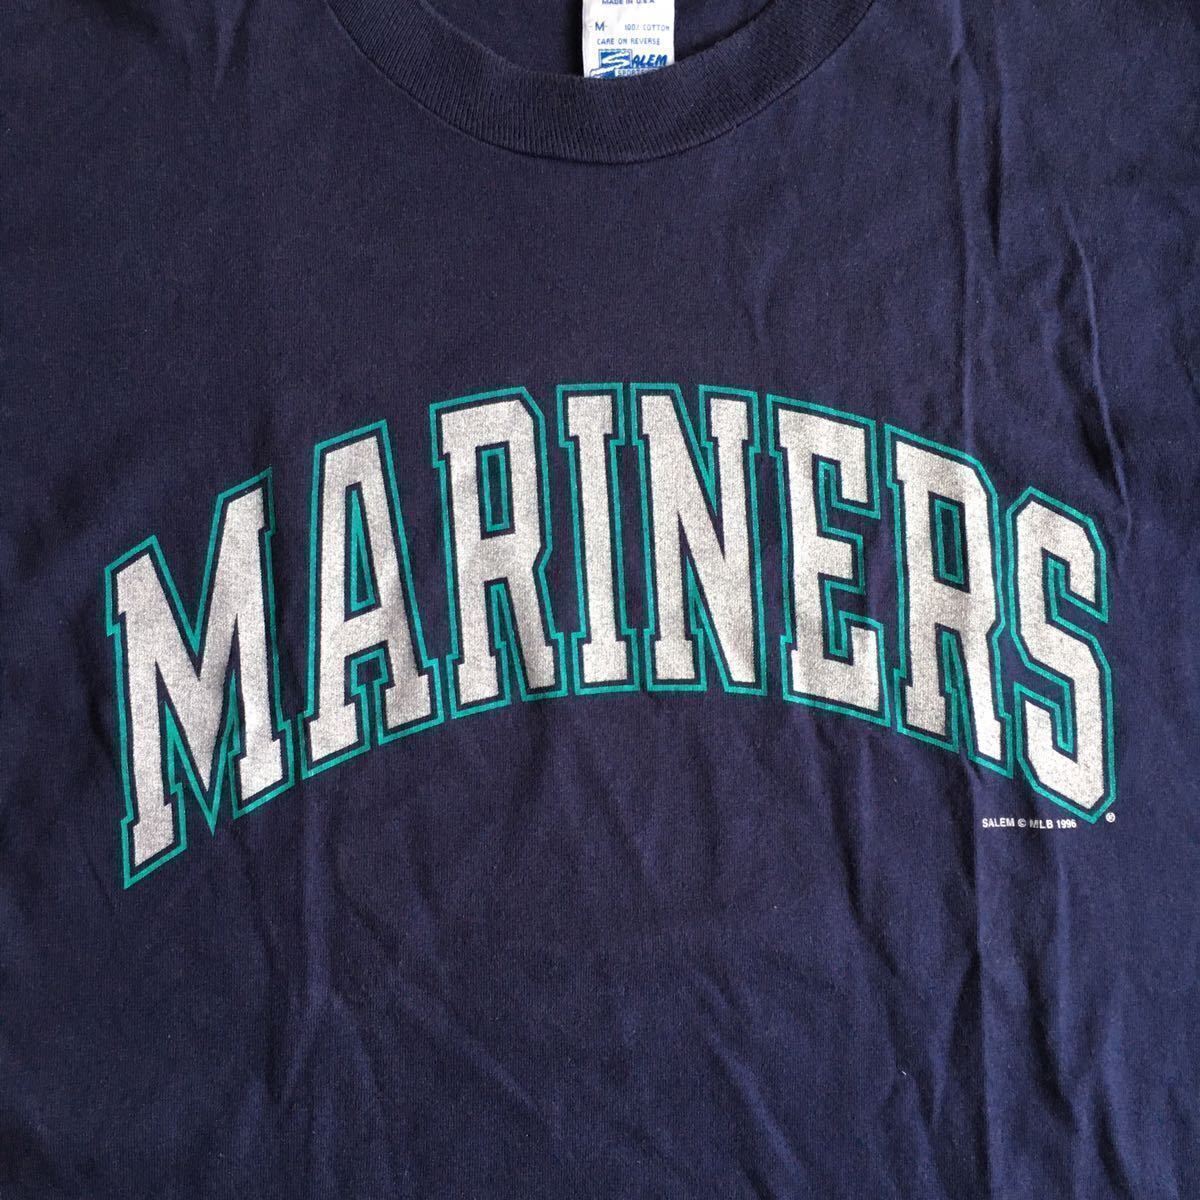 USA製 1996年 Seattle Mariners ロゴ Tシャツ ネイビー MADE IN USA 90s ベースボール 野球 Tee 半袖 Tシャツ メジャーリーグ_画像2